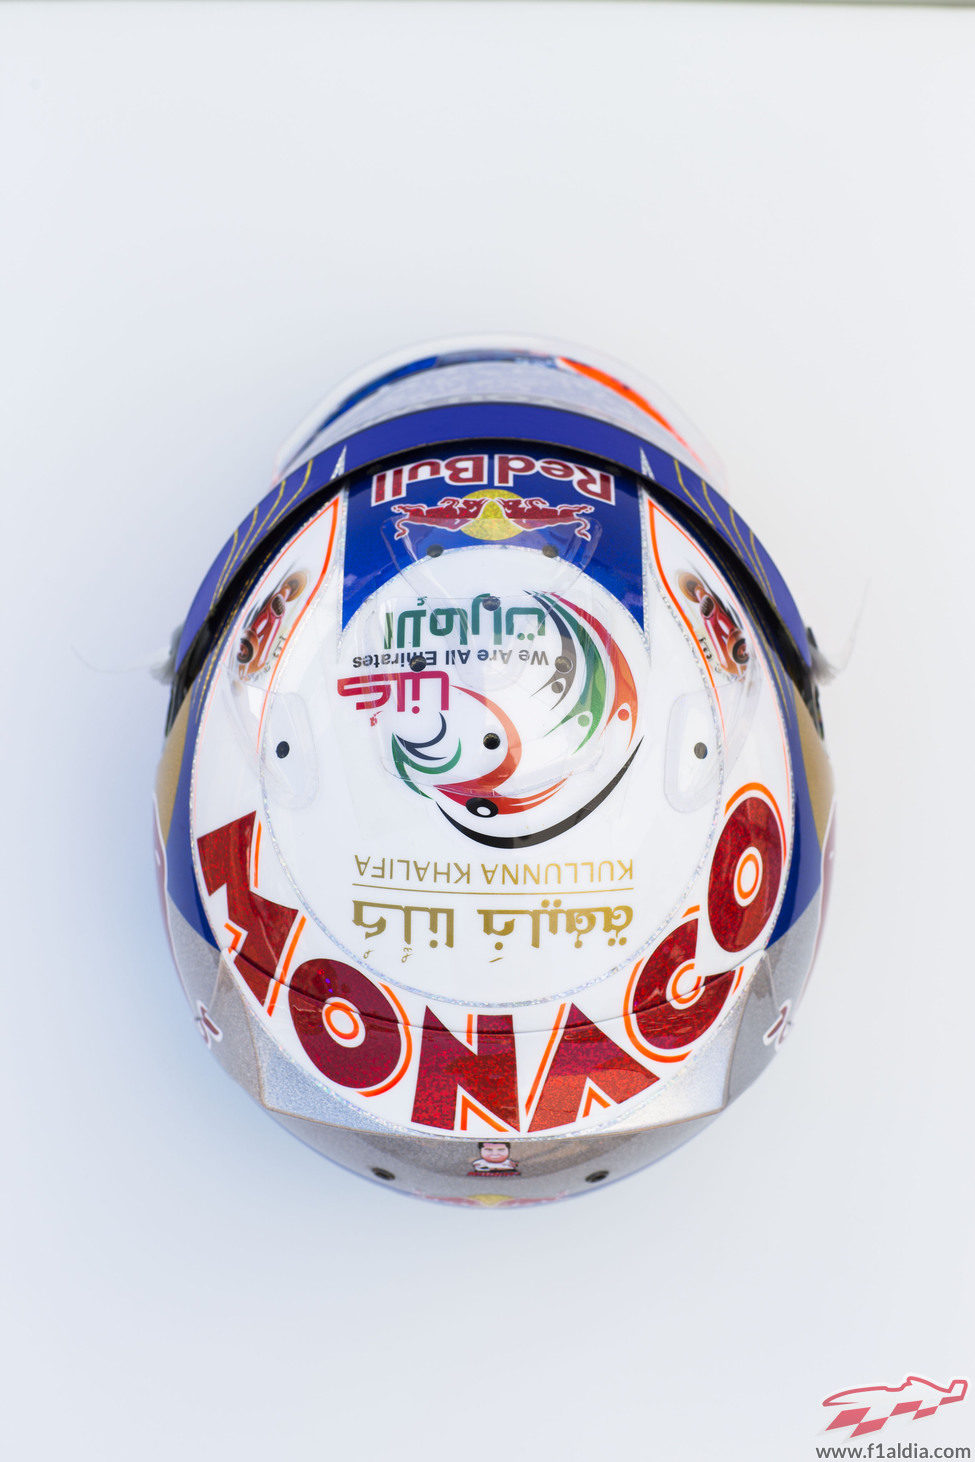 Plano cenital del casco de Daniel Ricciardo para Mónaco